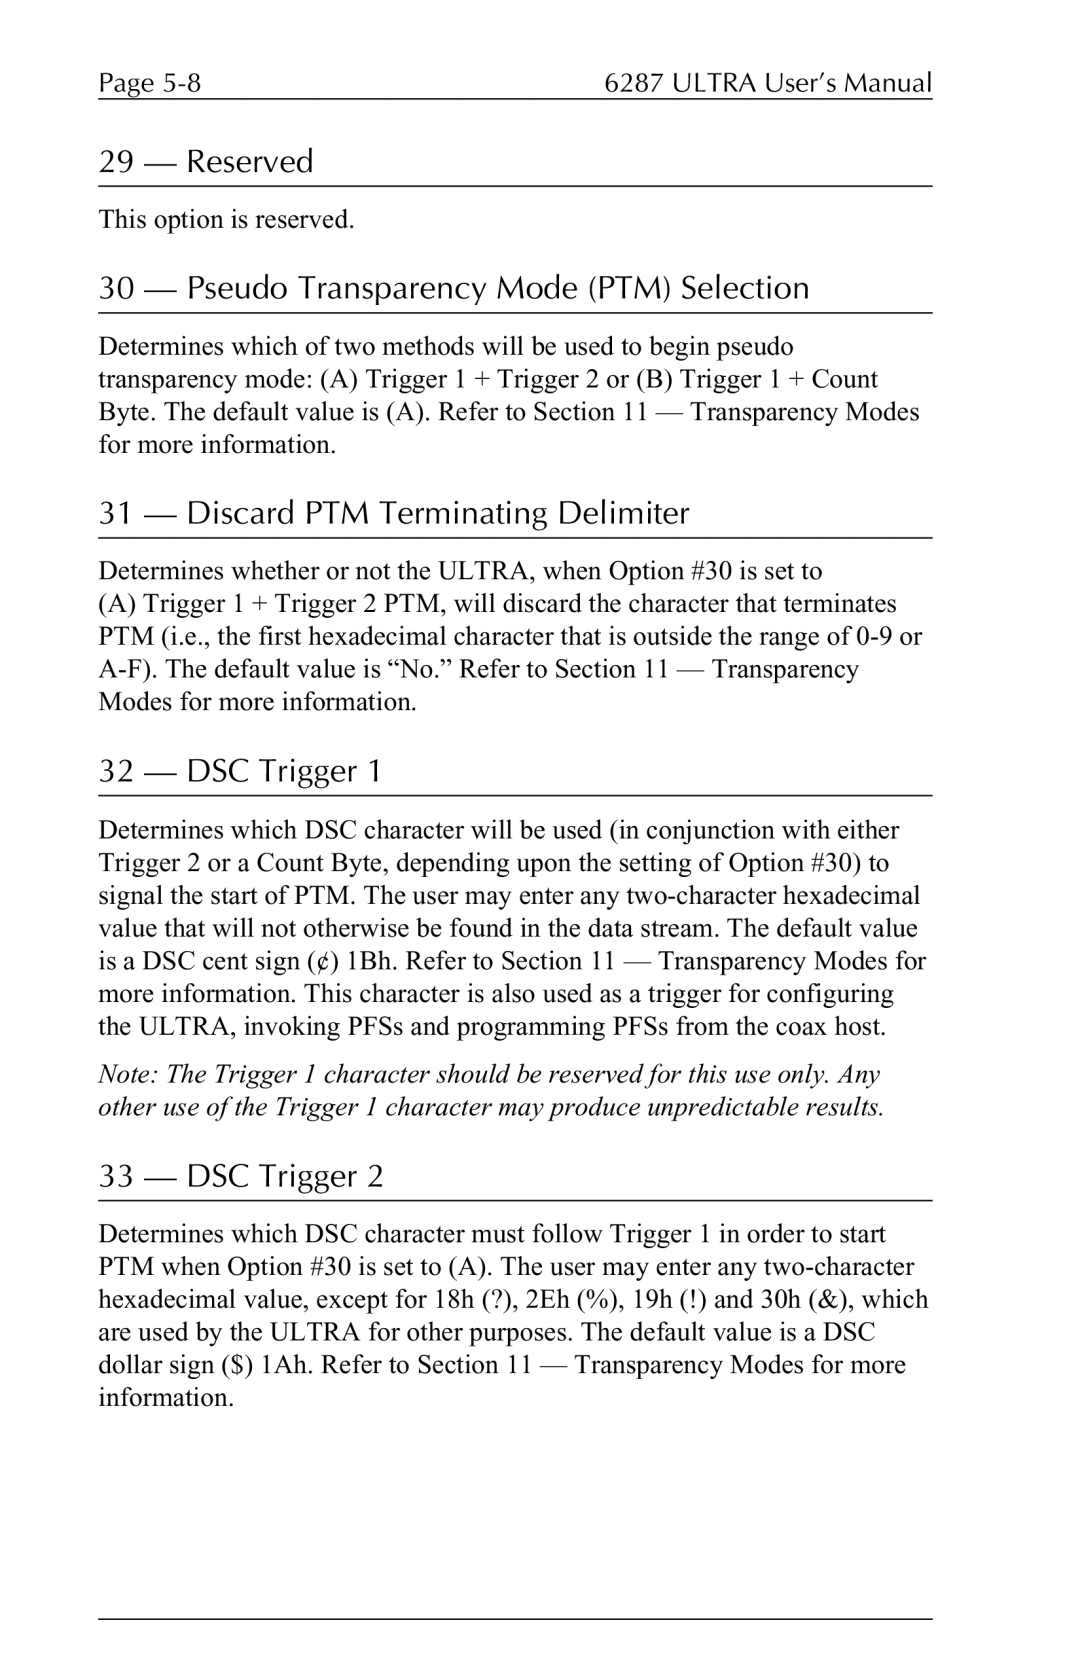 Agilent Technologies 6287 manual Pseudo Transparency Mode PTM Selection, Discard PTM Terminating Delimiter, DSC Trigger 